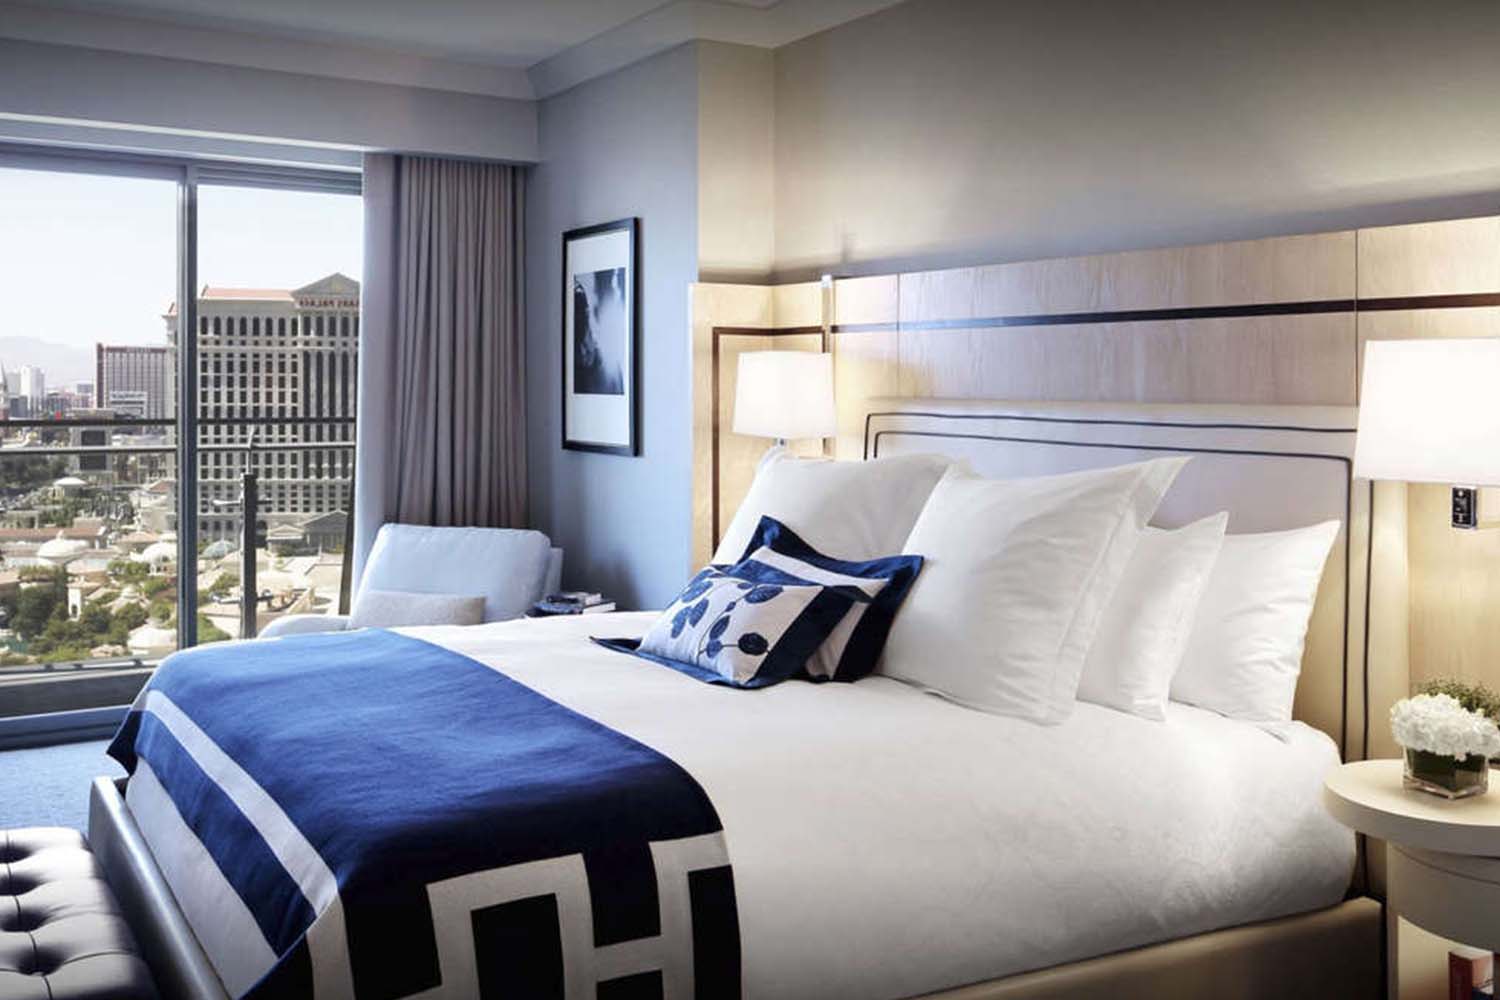 Bellagio Las Vegas - The Resort Room with Double Queen Beds (Caramel) at  the Bellagio Las Vegas